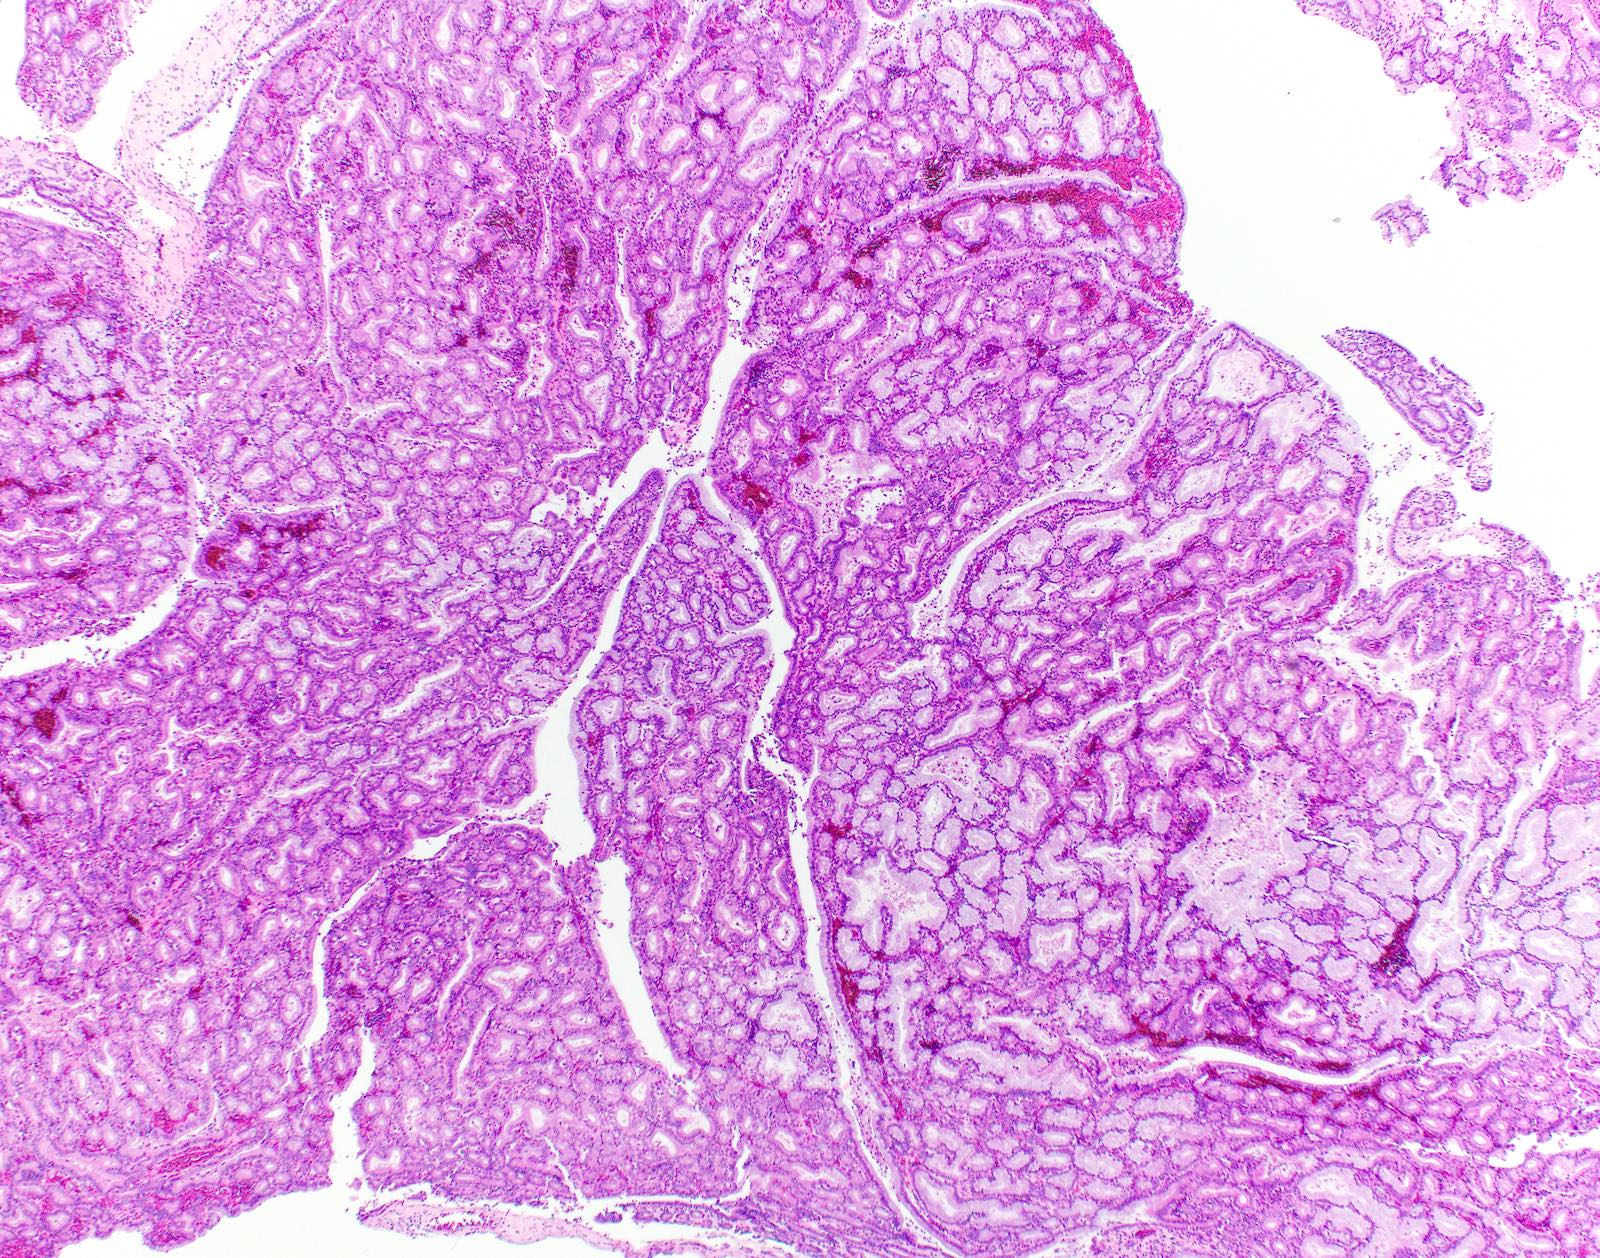 villous papilloma gallbladder